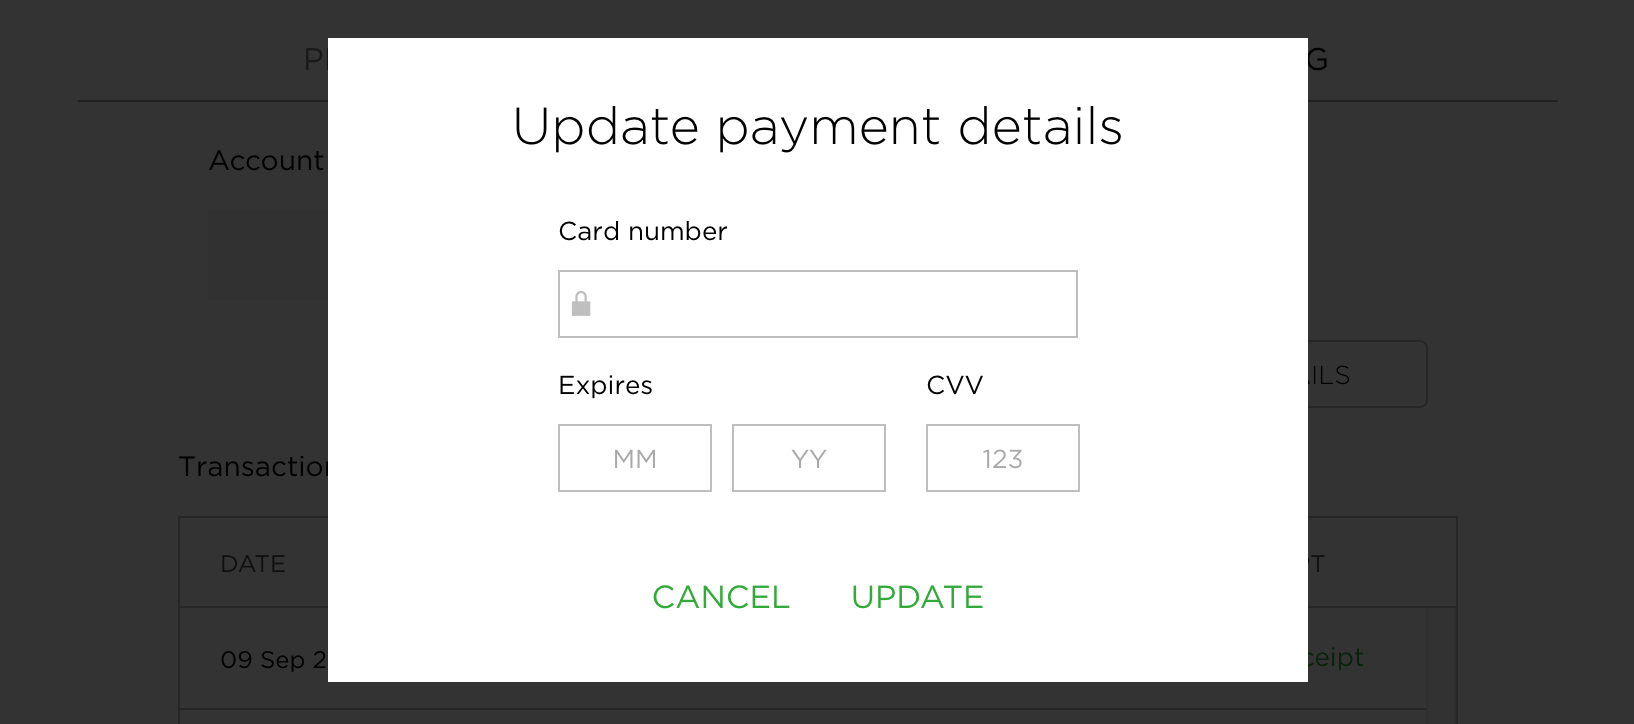 Update payment details